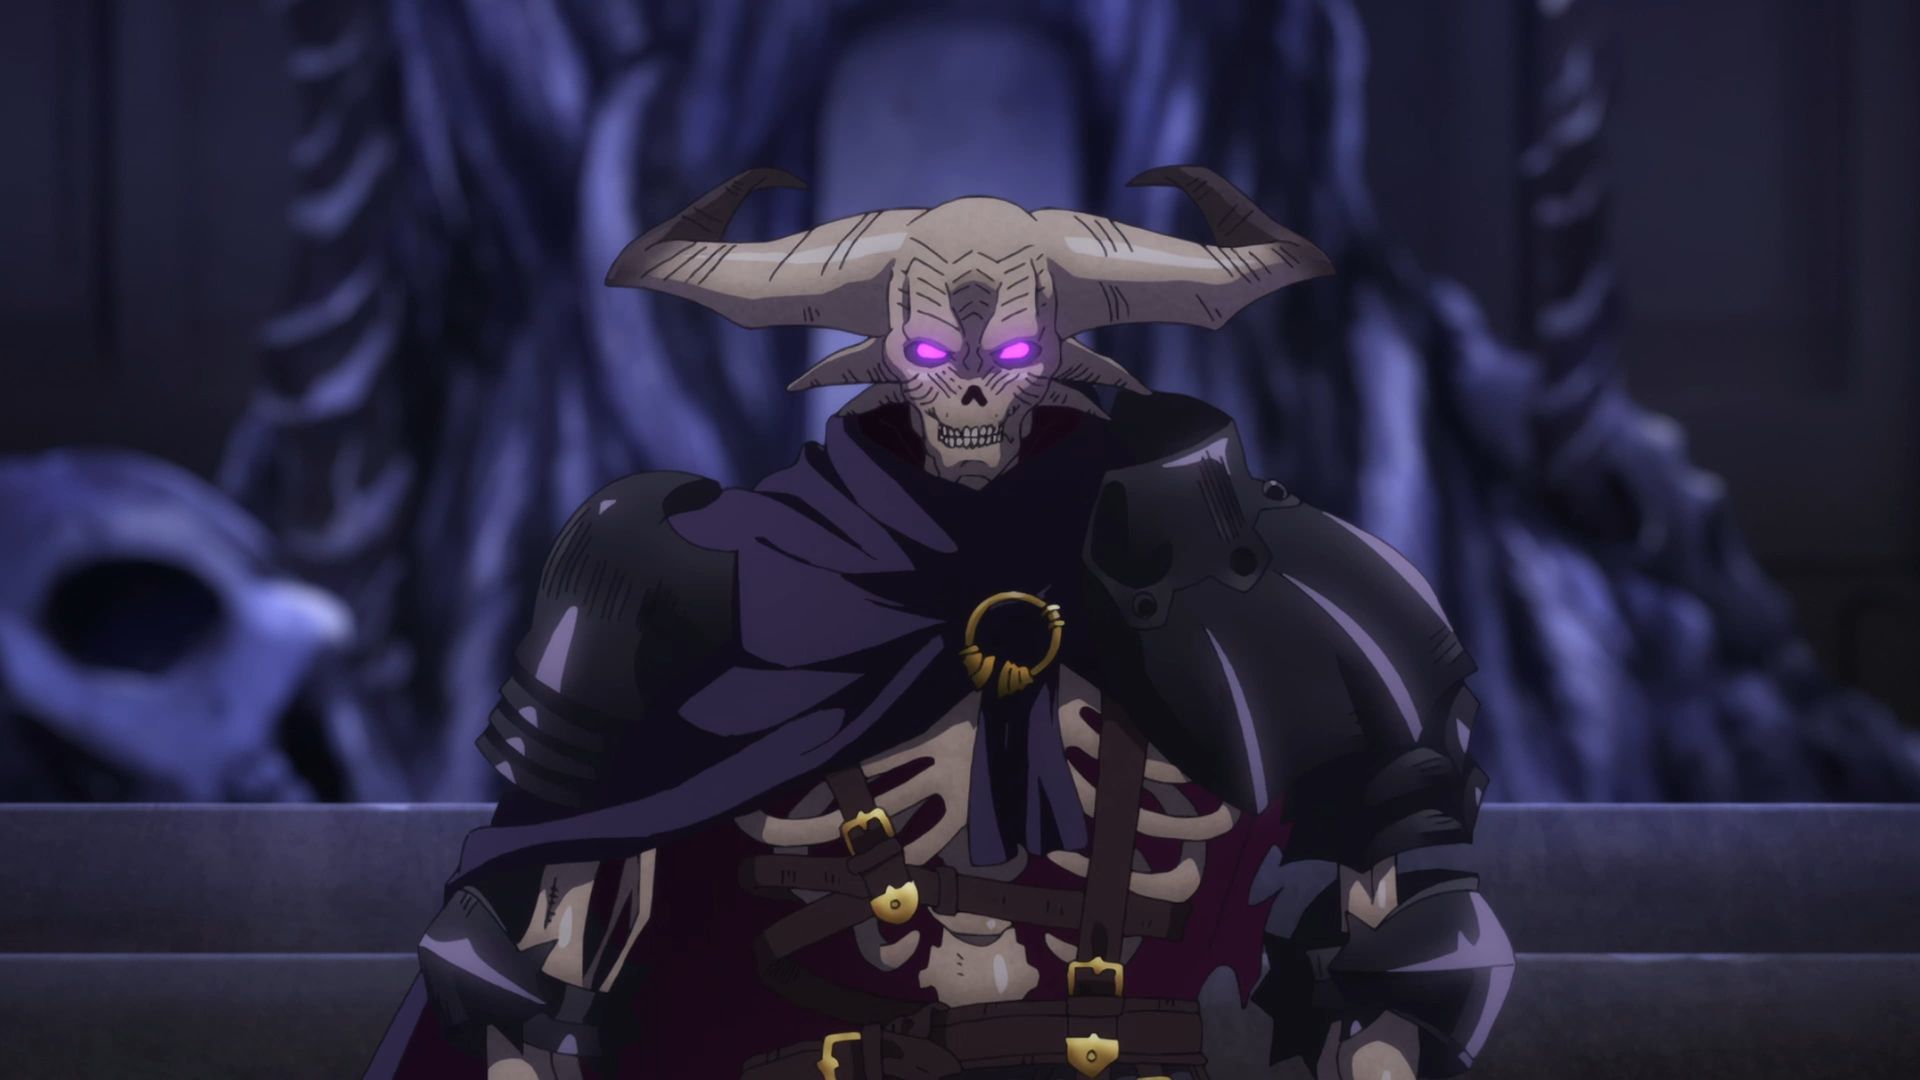 The Demon Sword Master of Excalibur Academy background